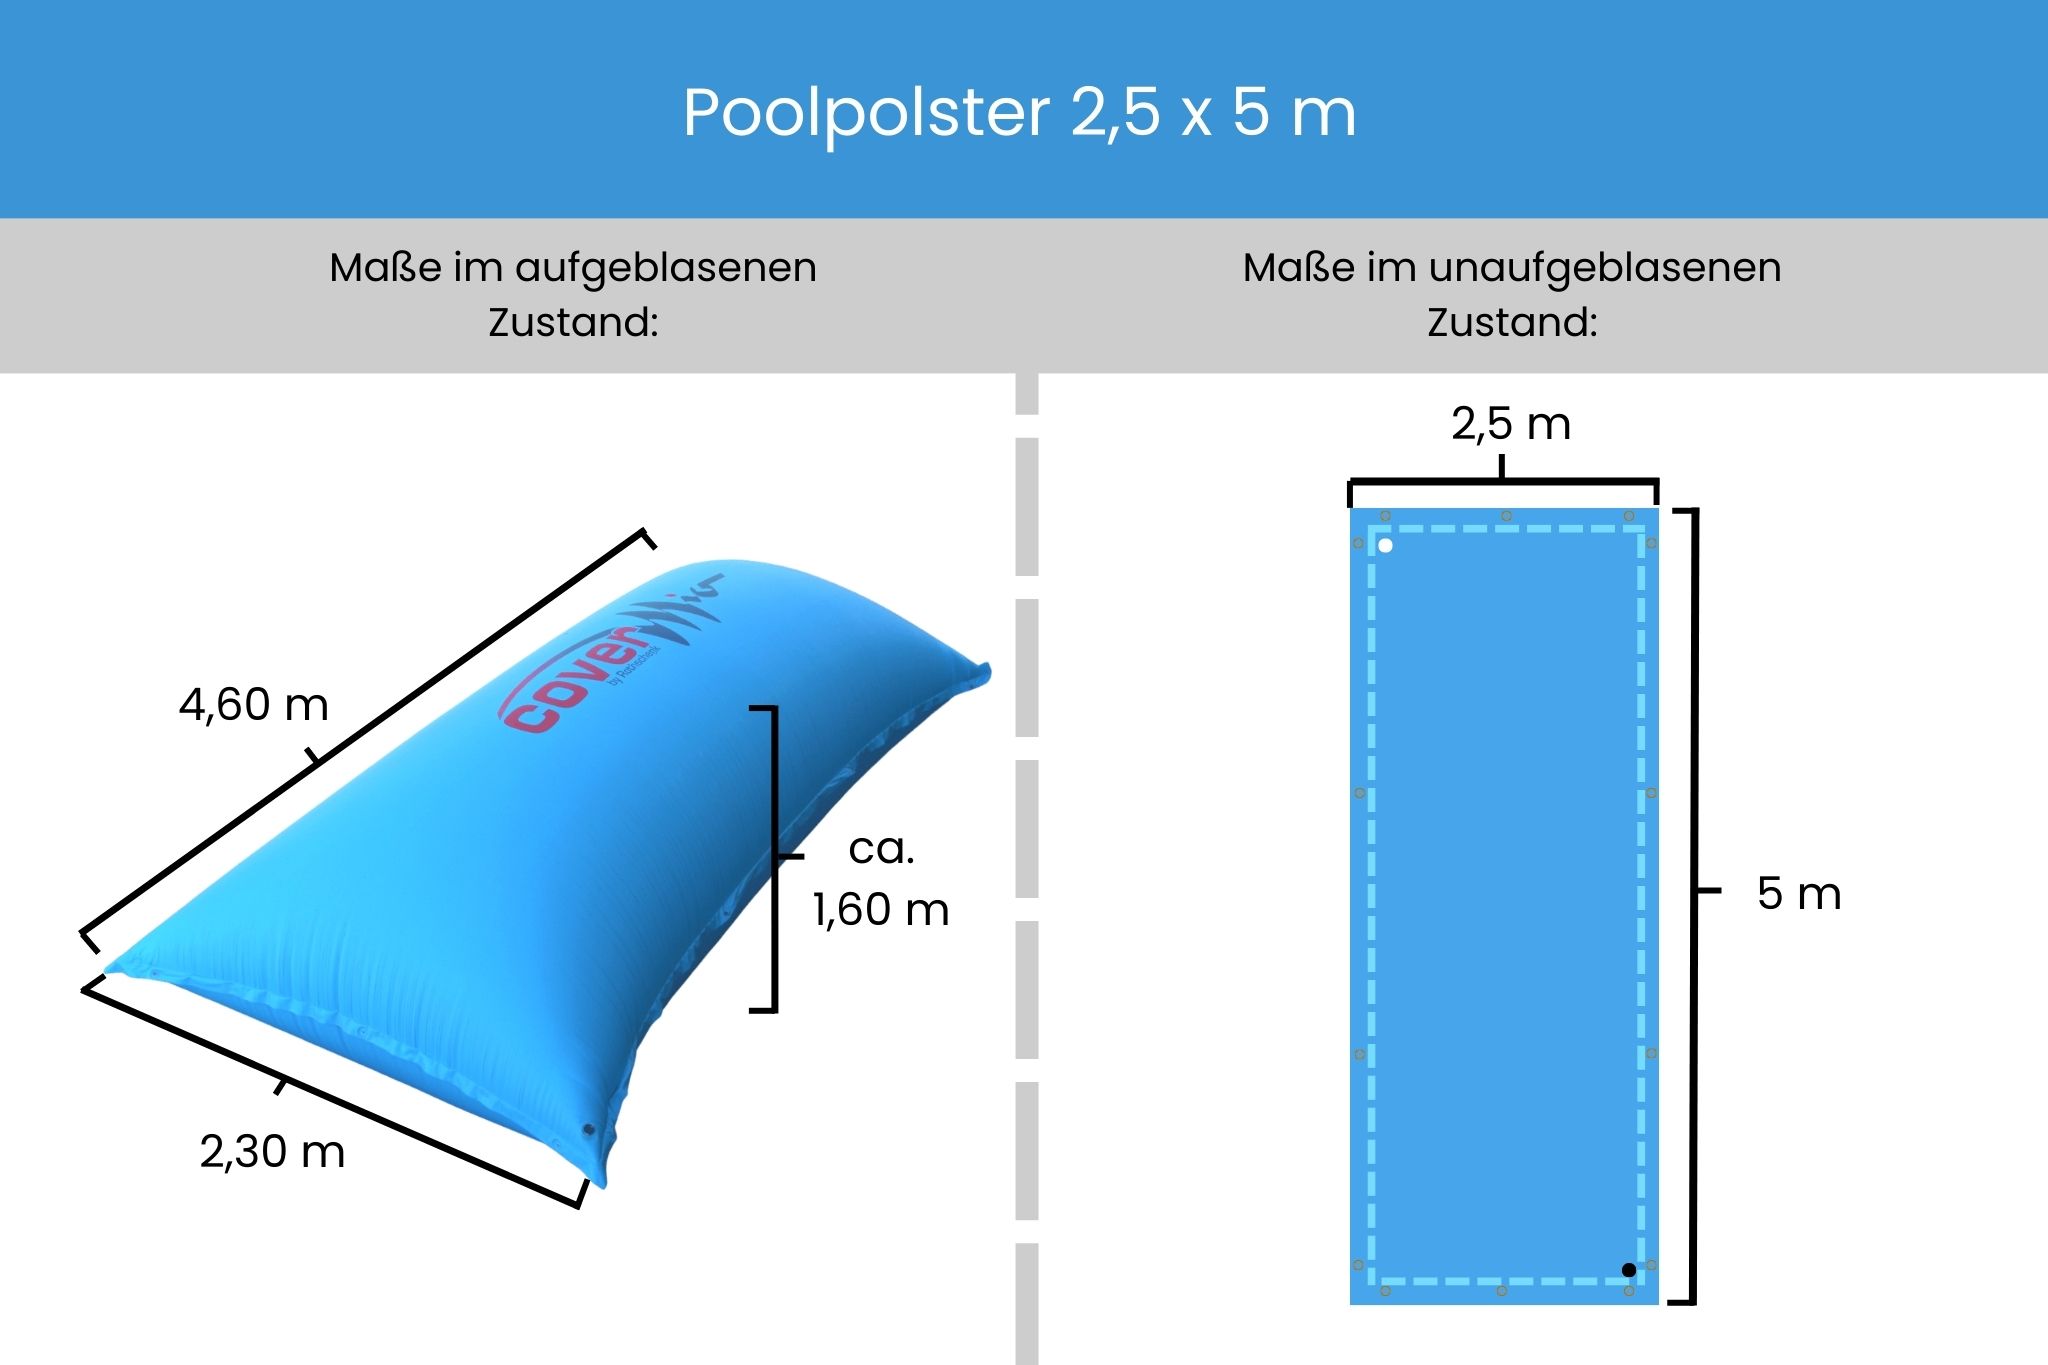 Poolpolster 2,5 x 5 m